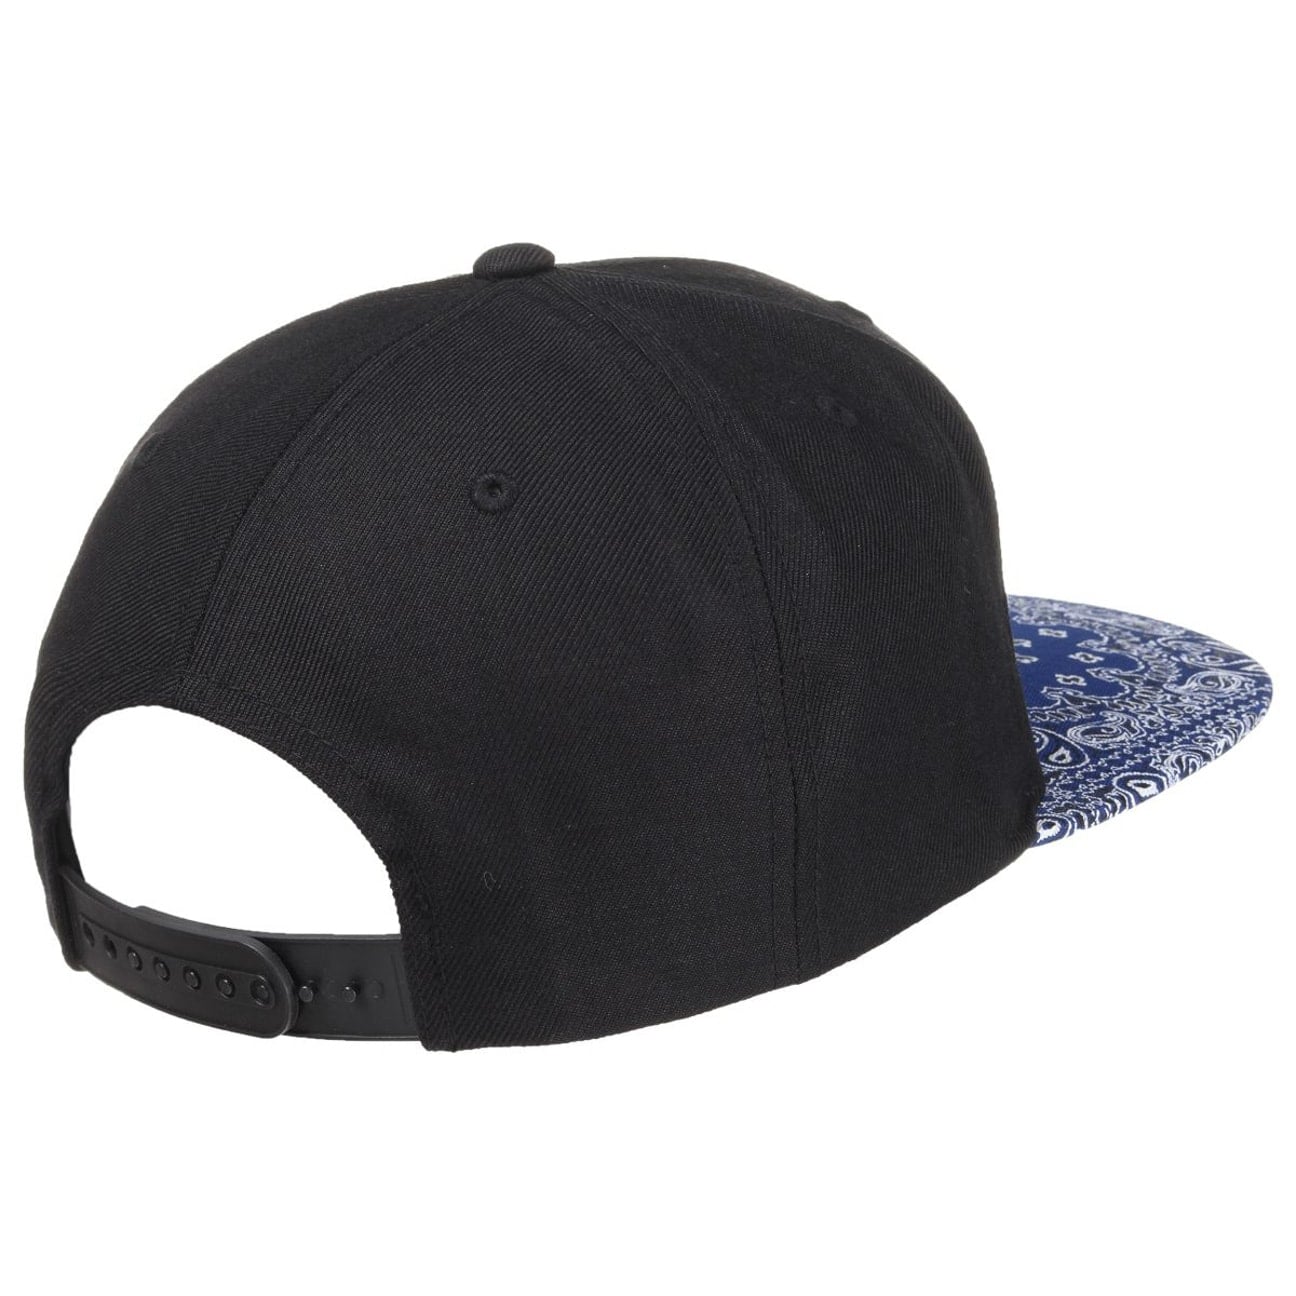 Bandana Snapback Cap, EUR 8,95 --> Hats, caps & beanies shop online ...